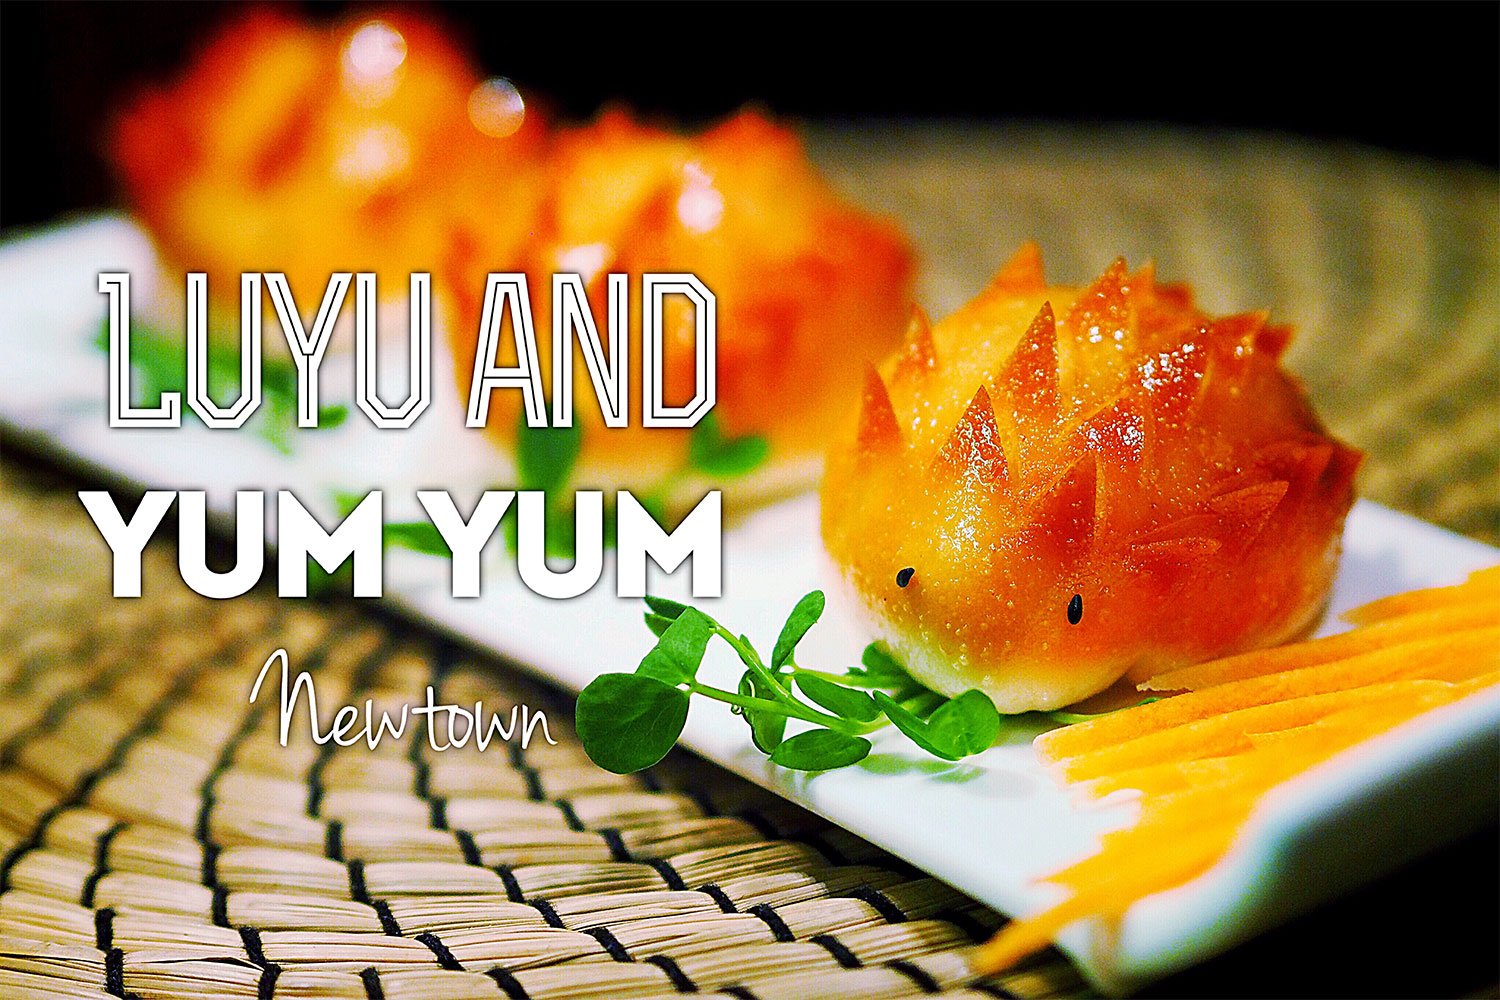 Manga Hedgehog Dumplings from Luyu and Yum Yum, Newtown. Sydney Food Blog Insatiable Munchies Review